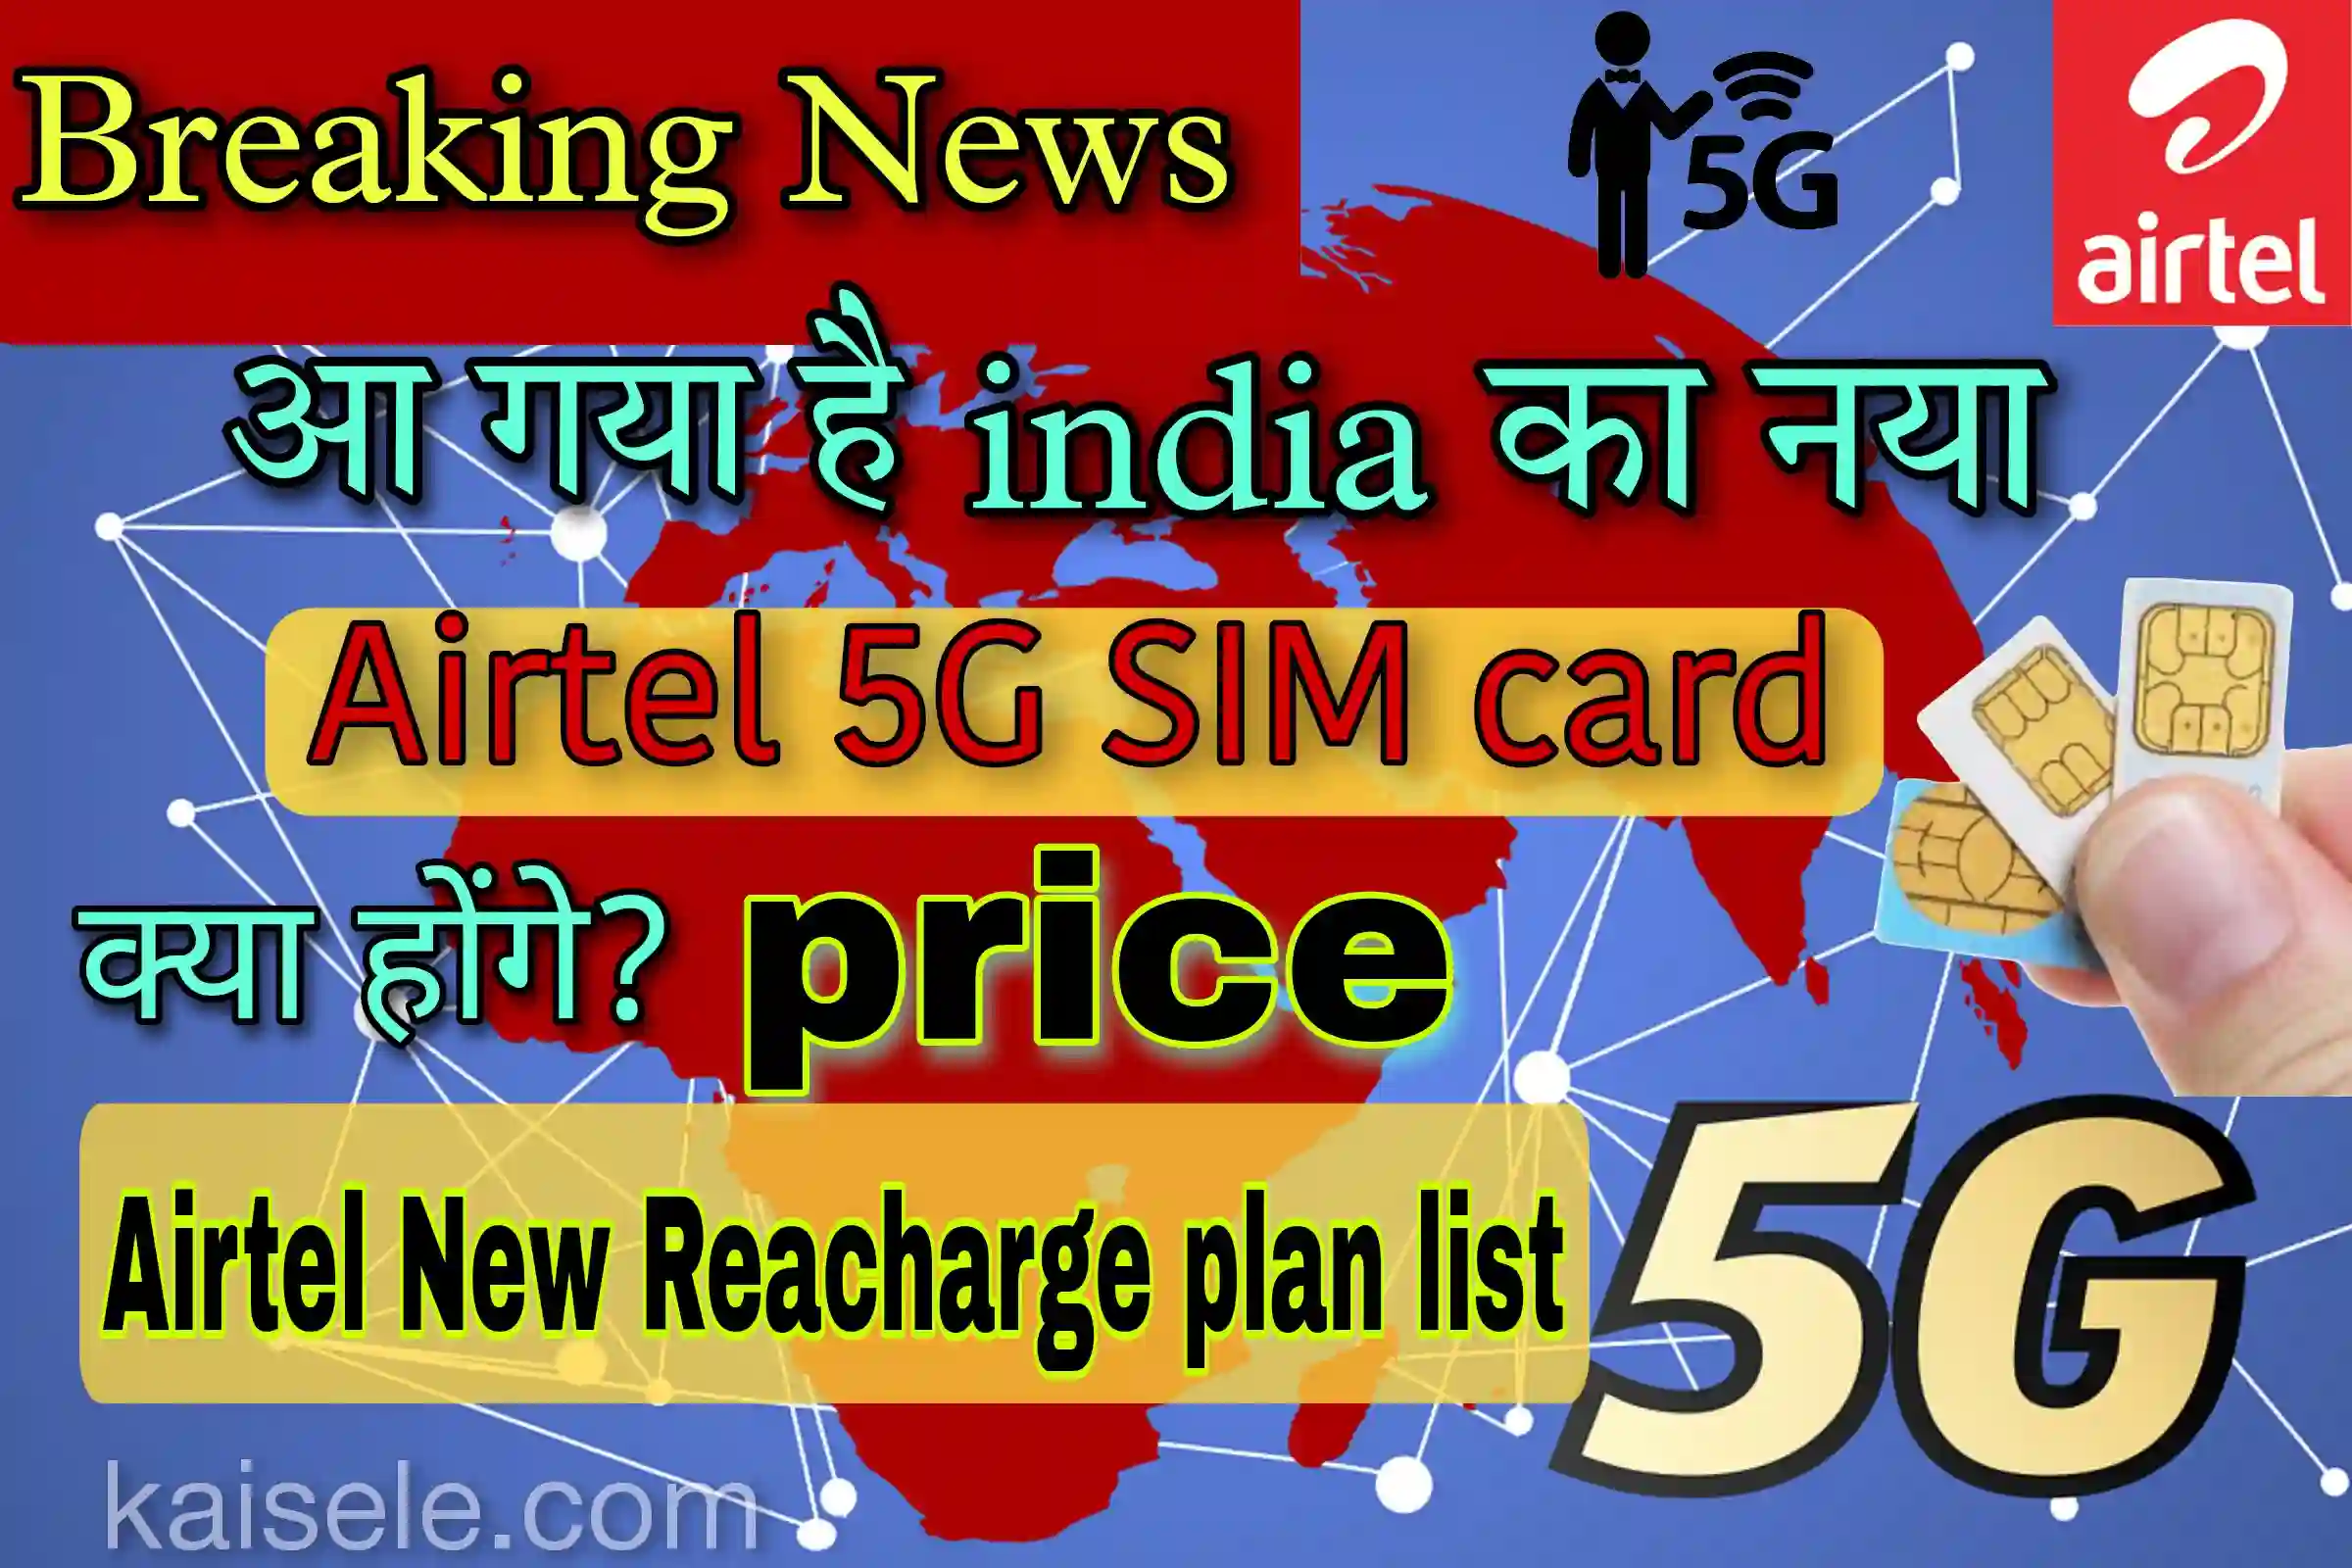 Airtel 5G sim and plans